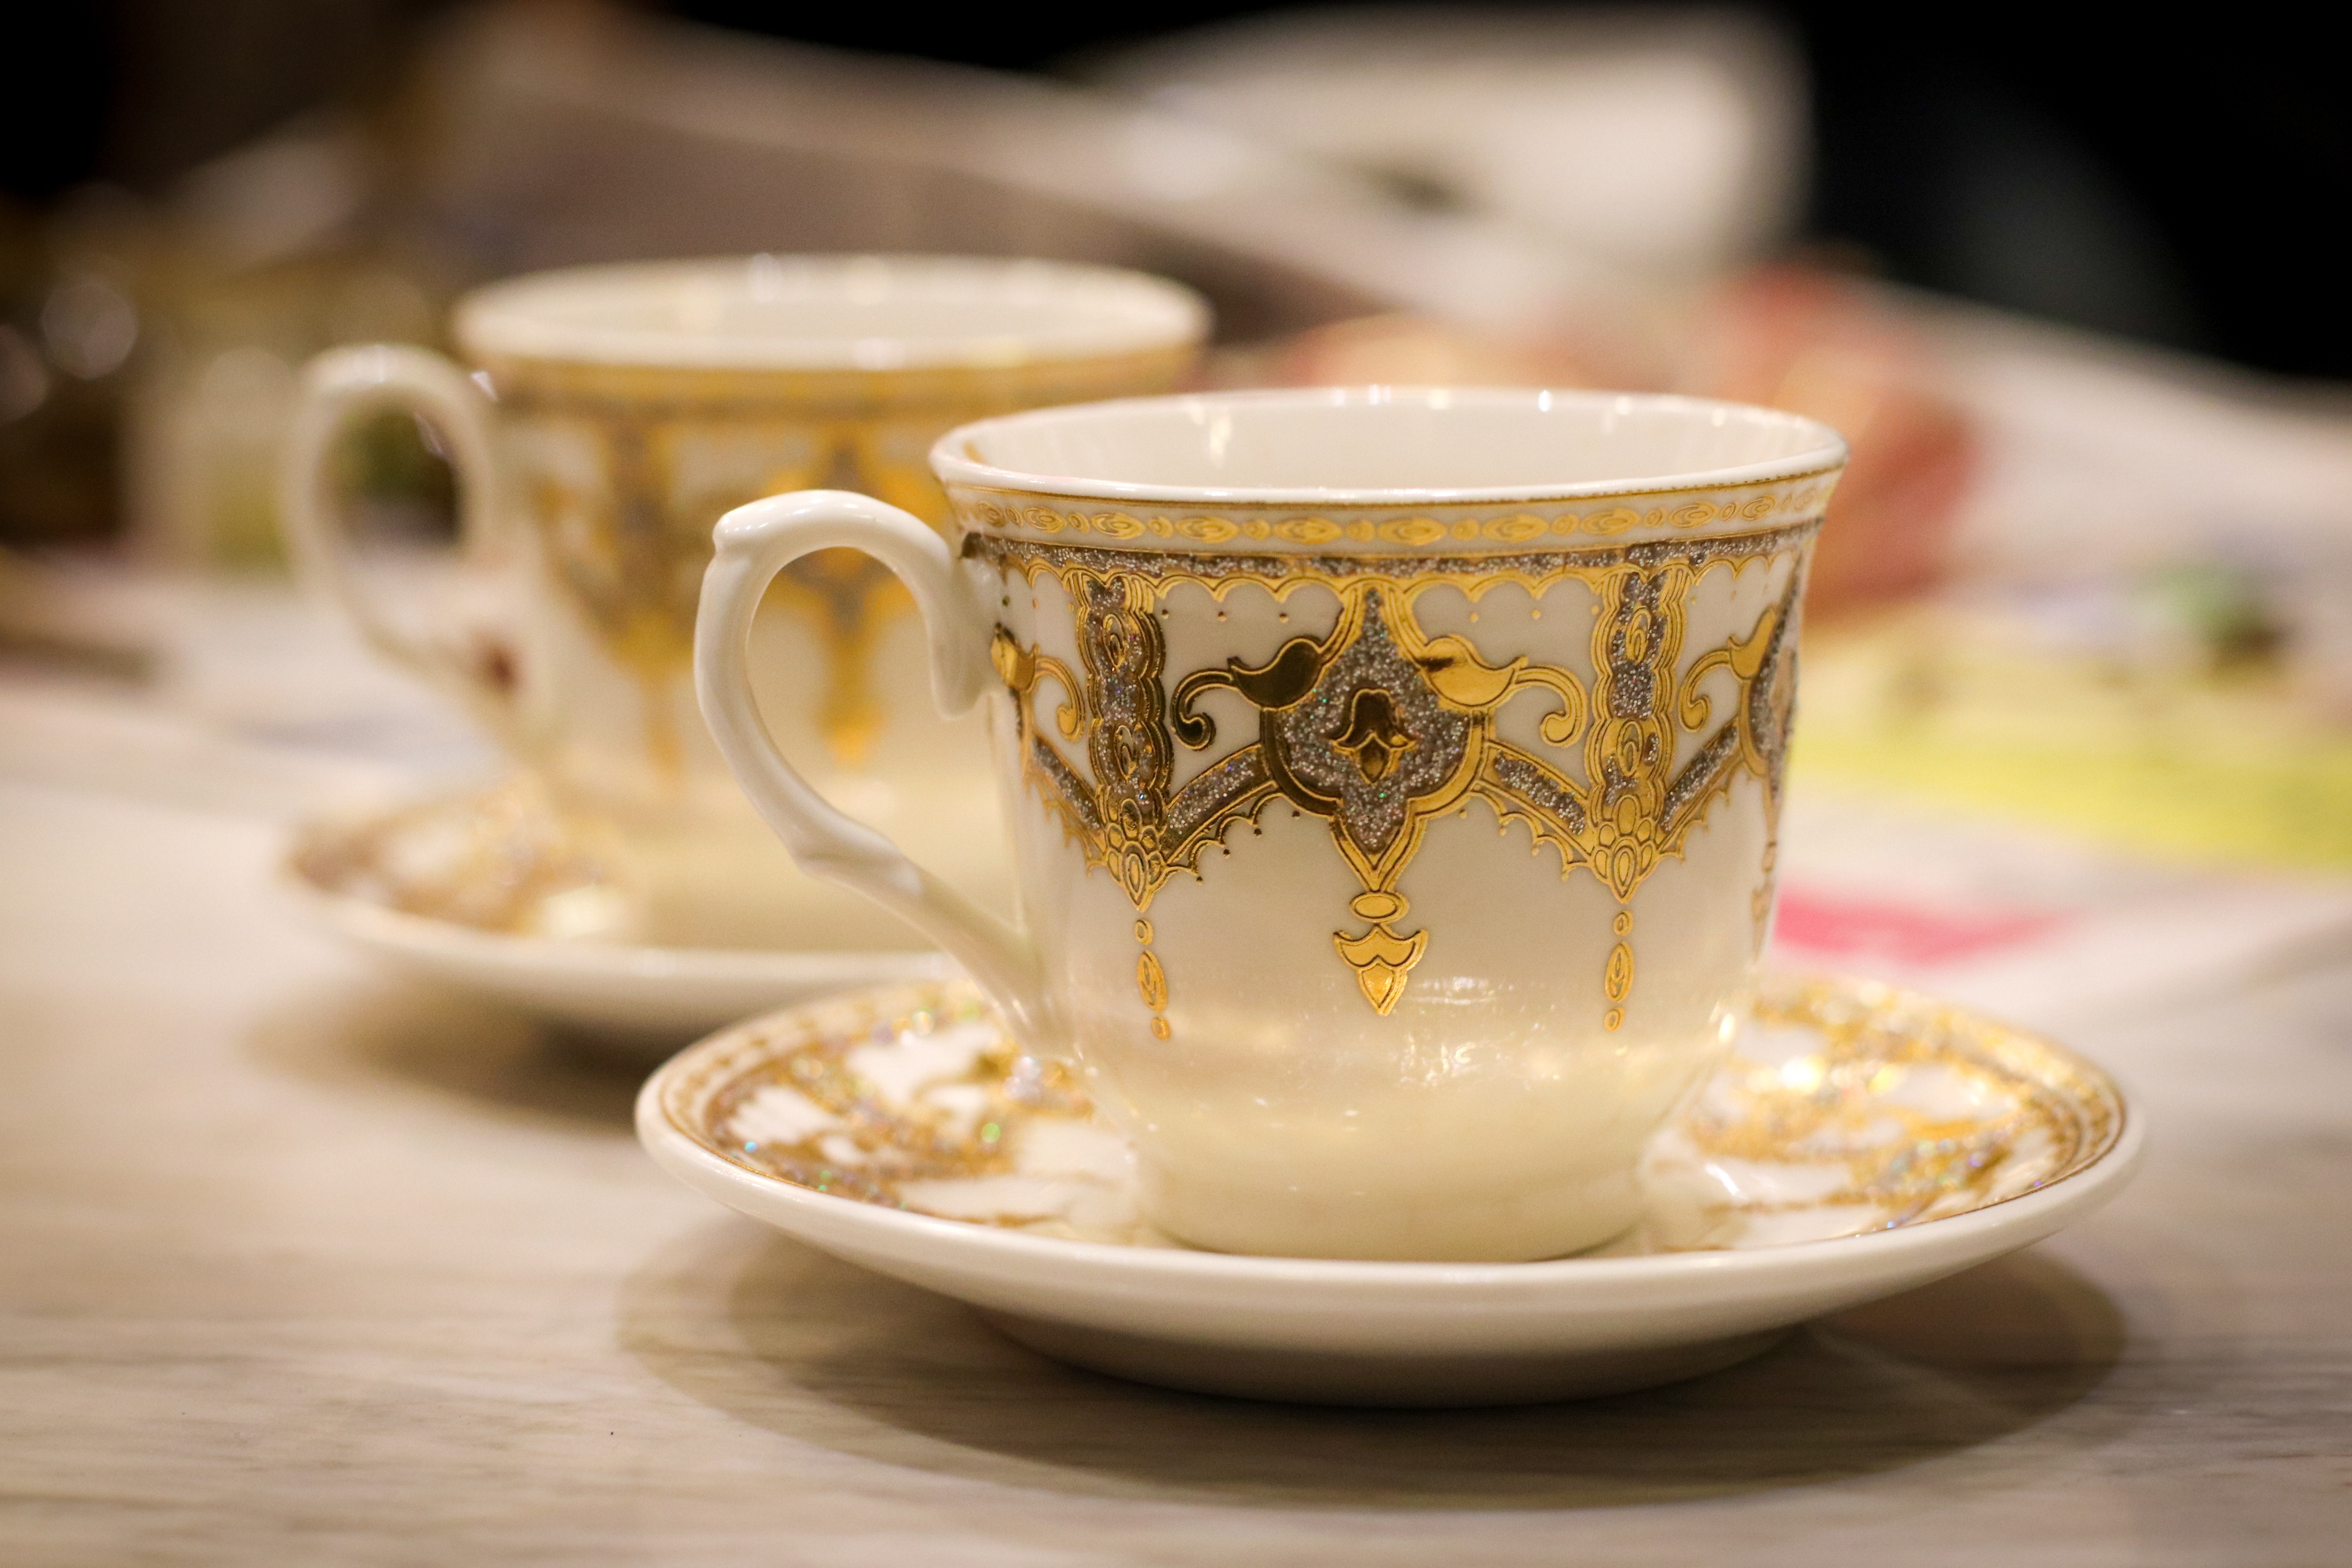 https://dorothysteas.co.uk/files/images/white-and-golden-ceramic-teacup-on-saucer-3936375.jpg